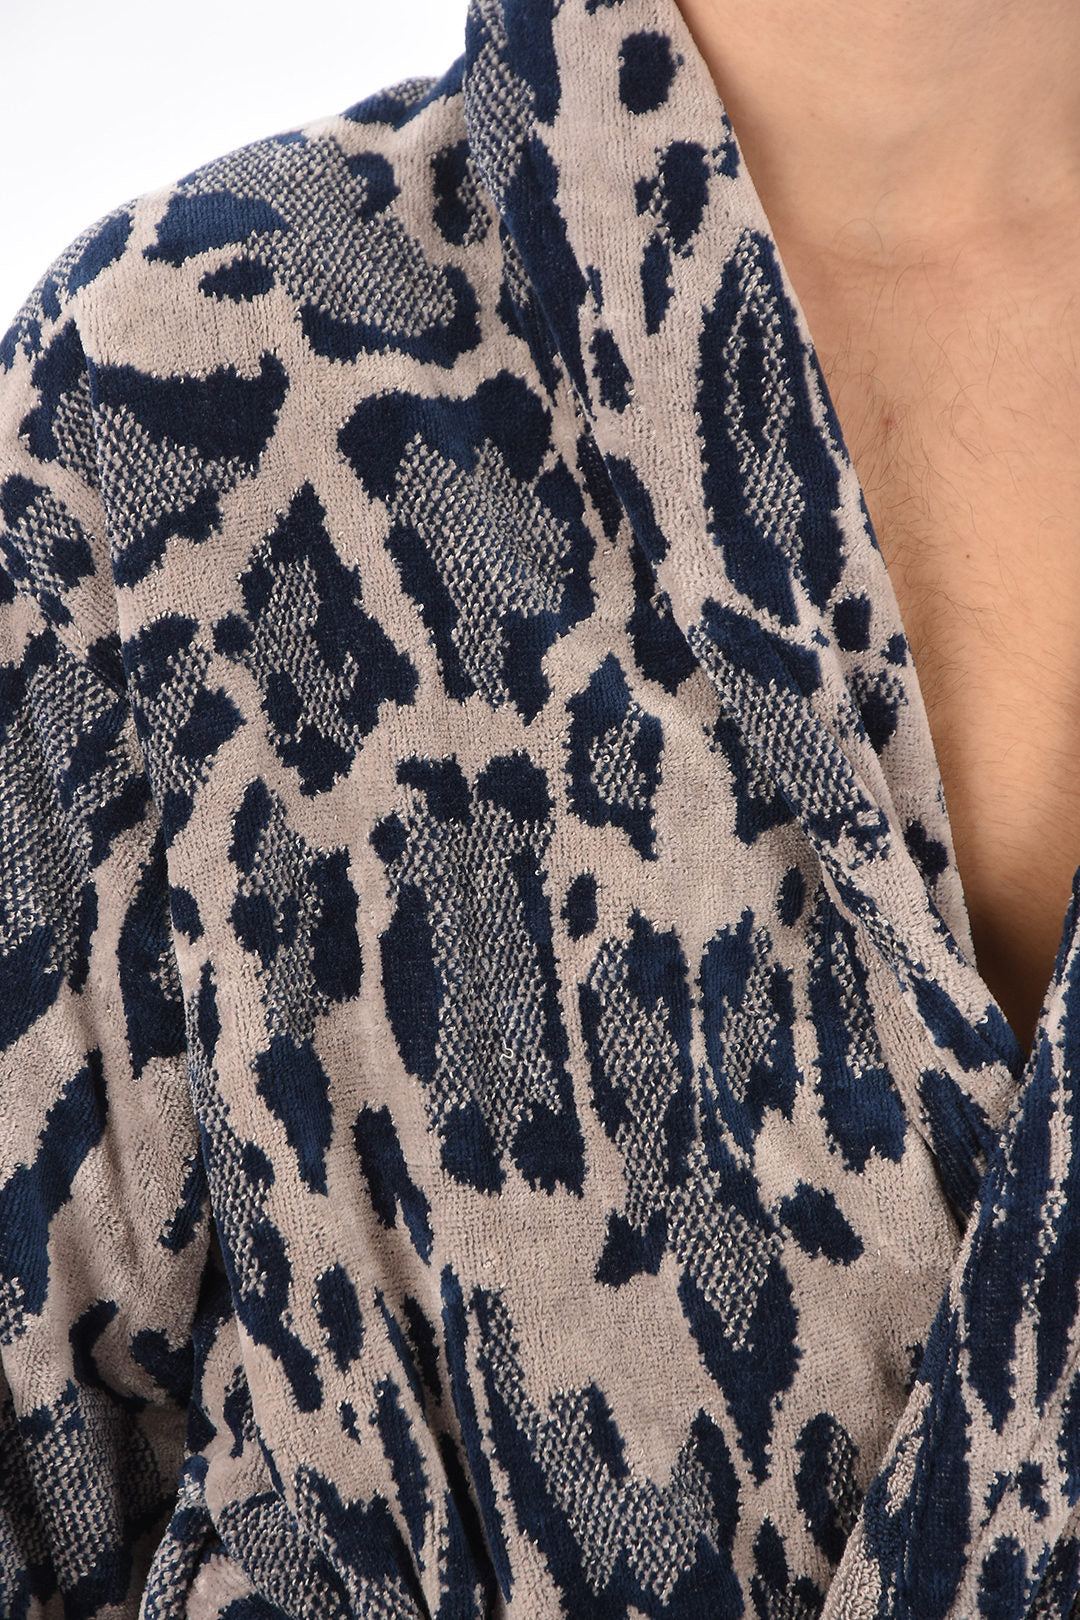 Home animal print cotton bathrobe beige, blue